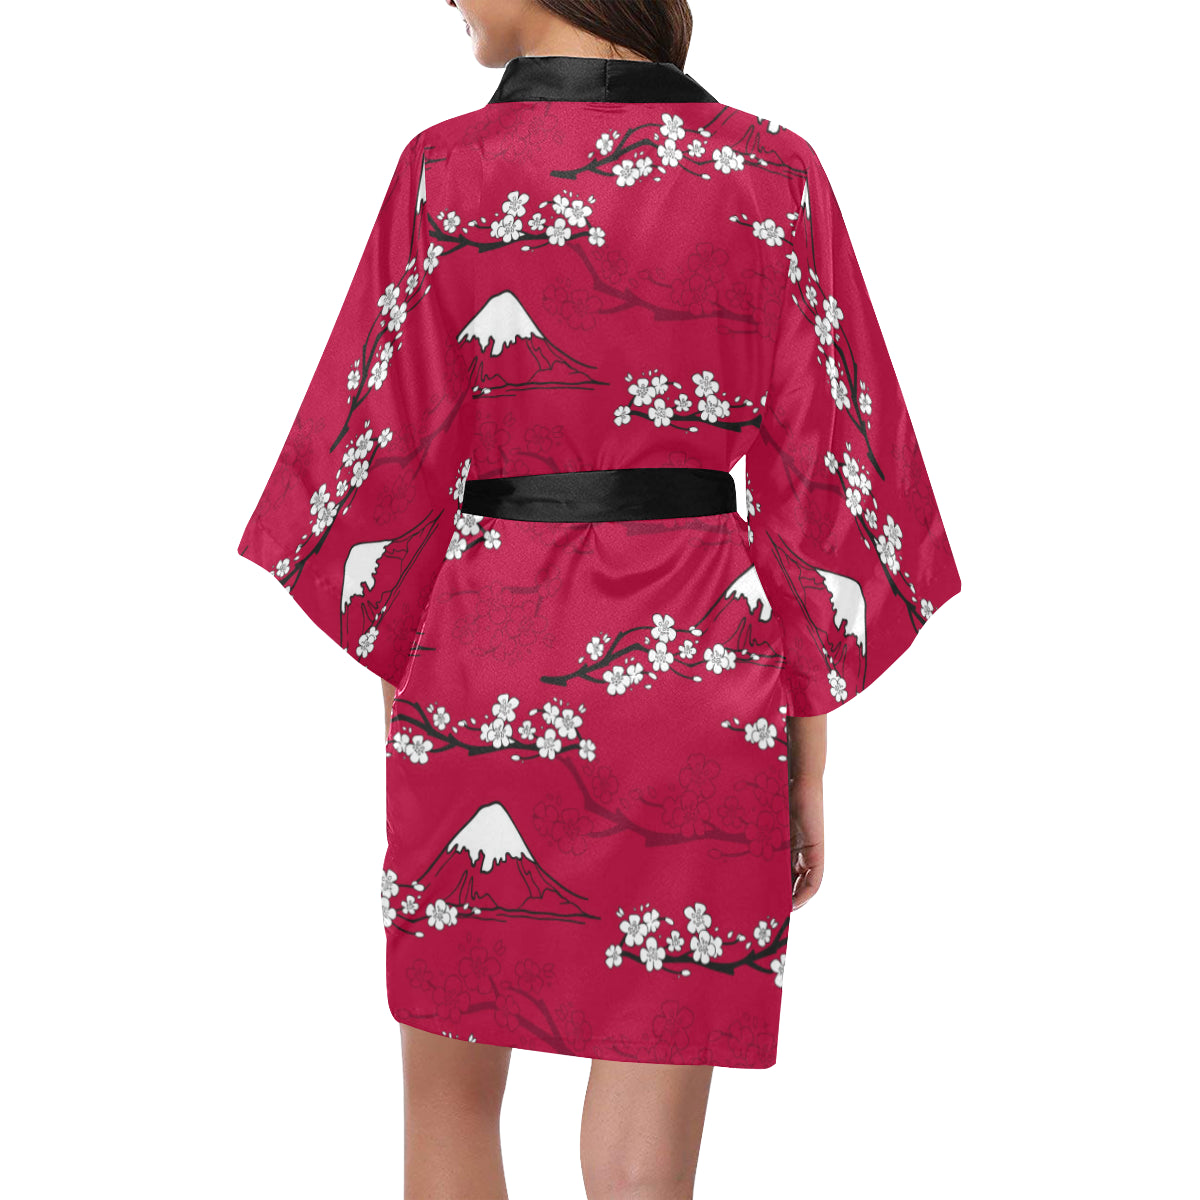 Japanese Floral Kimono Robe, Red Flowers Print Oriental Japan Peignoir Asian Women's Short Vintage Lounge Sleepwear Long Sleeve Bathrobe Starcove Fashion